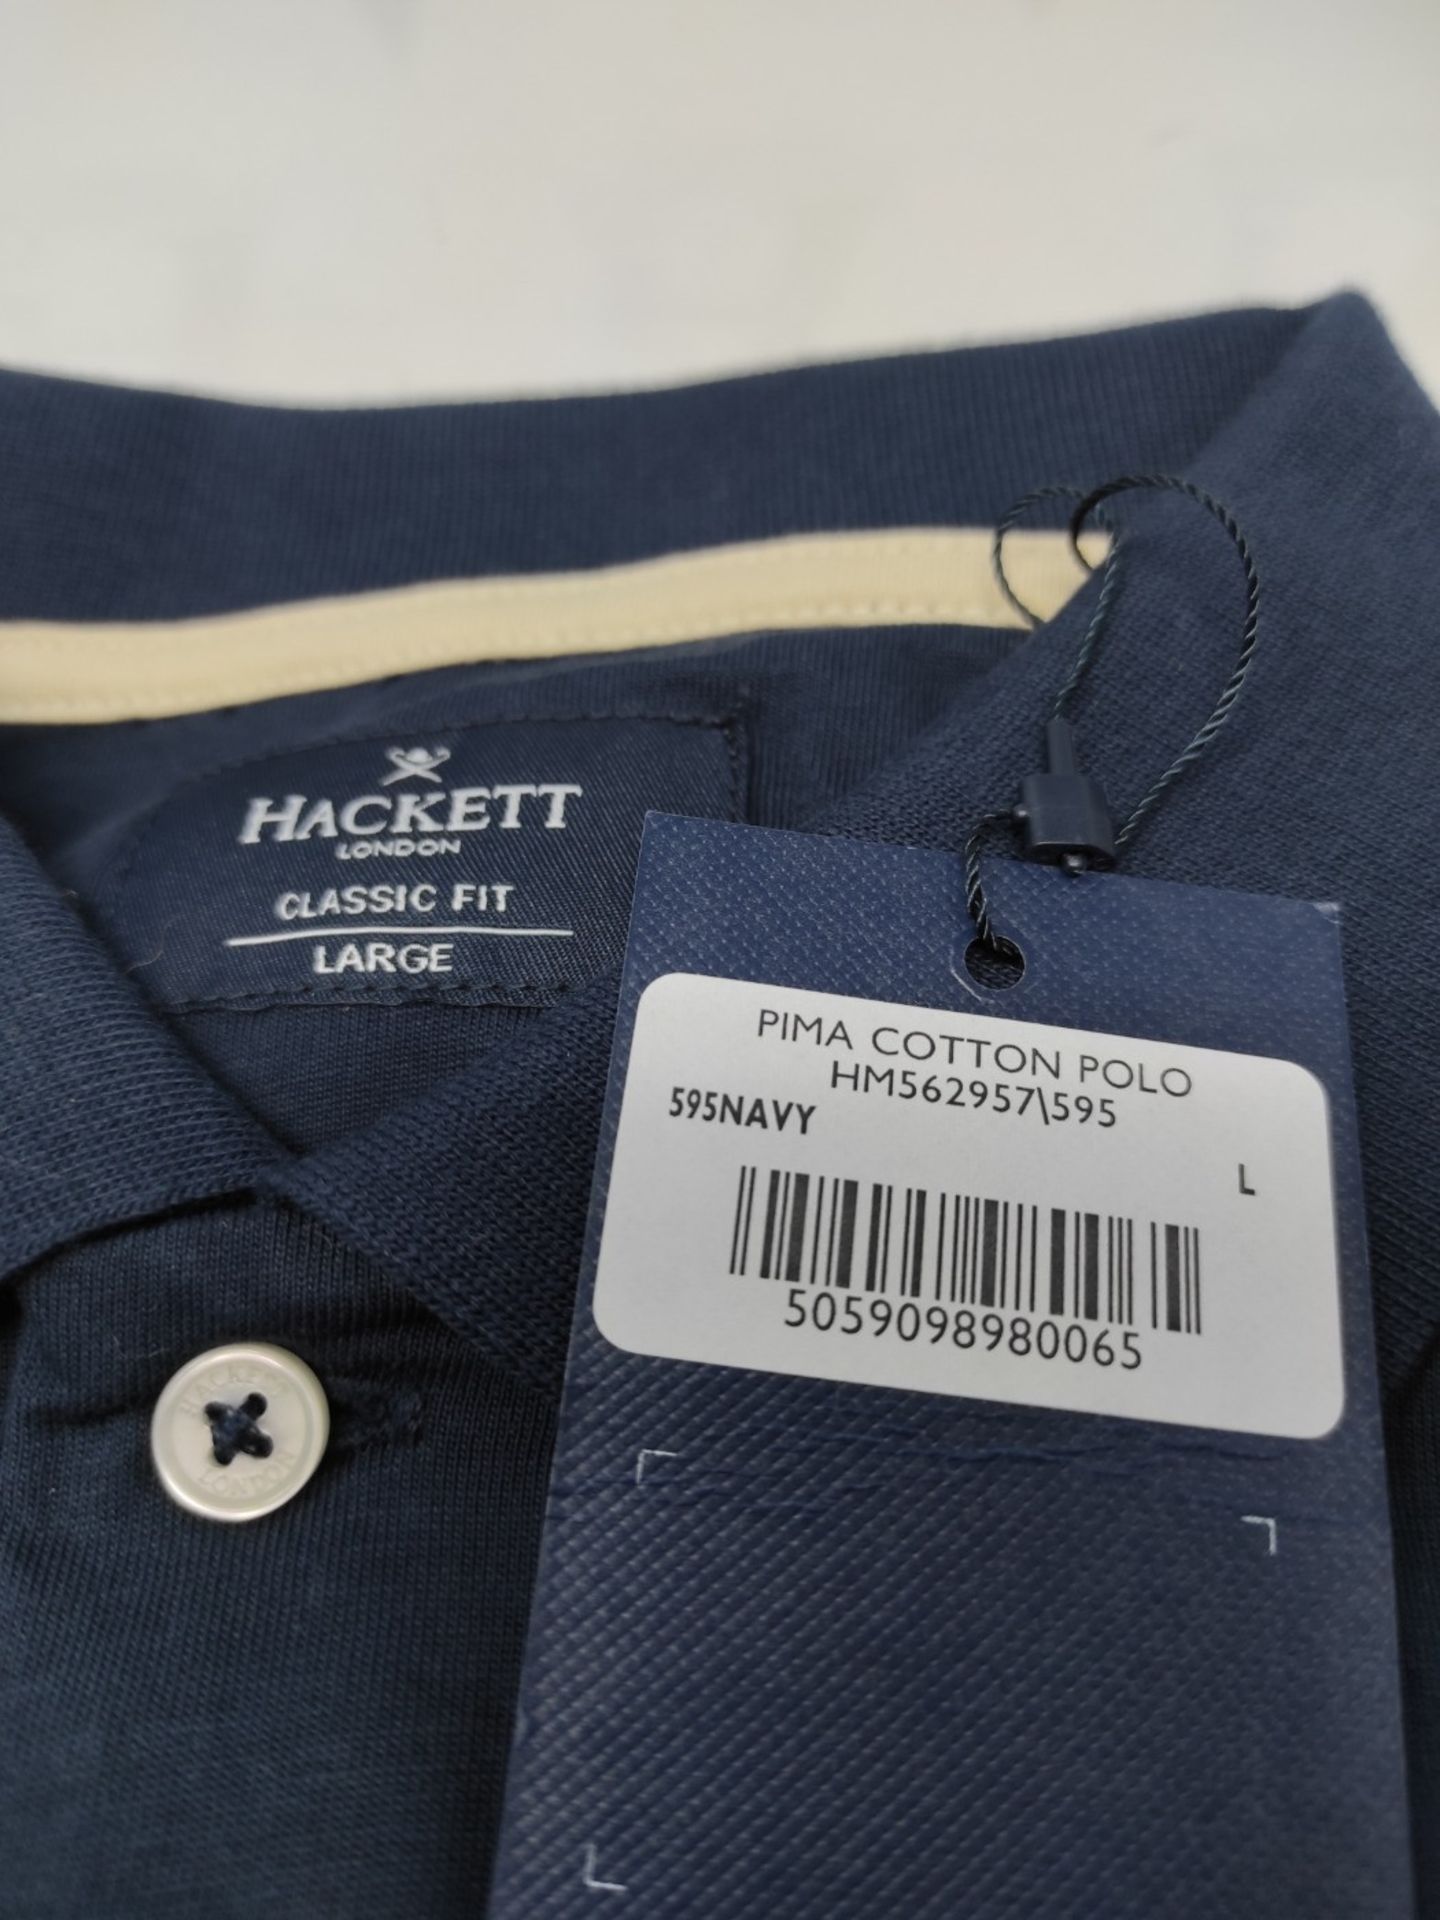 RRP £63.00 Hackett London Men's Pima Cotton Polo Shirt, 595navy, L - Image 3 of 3